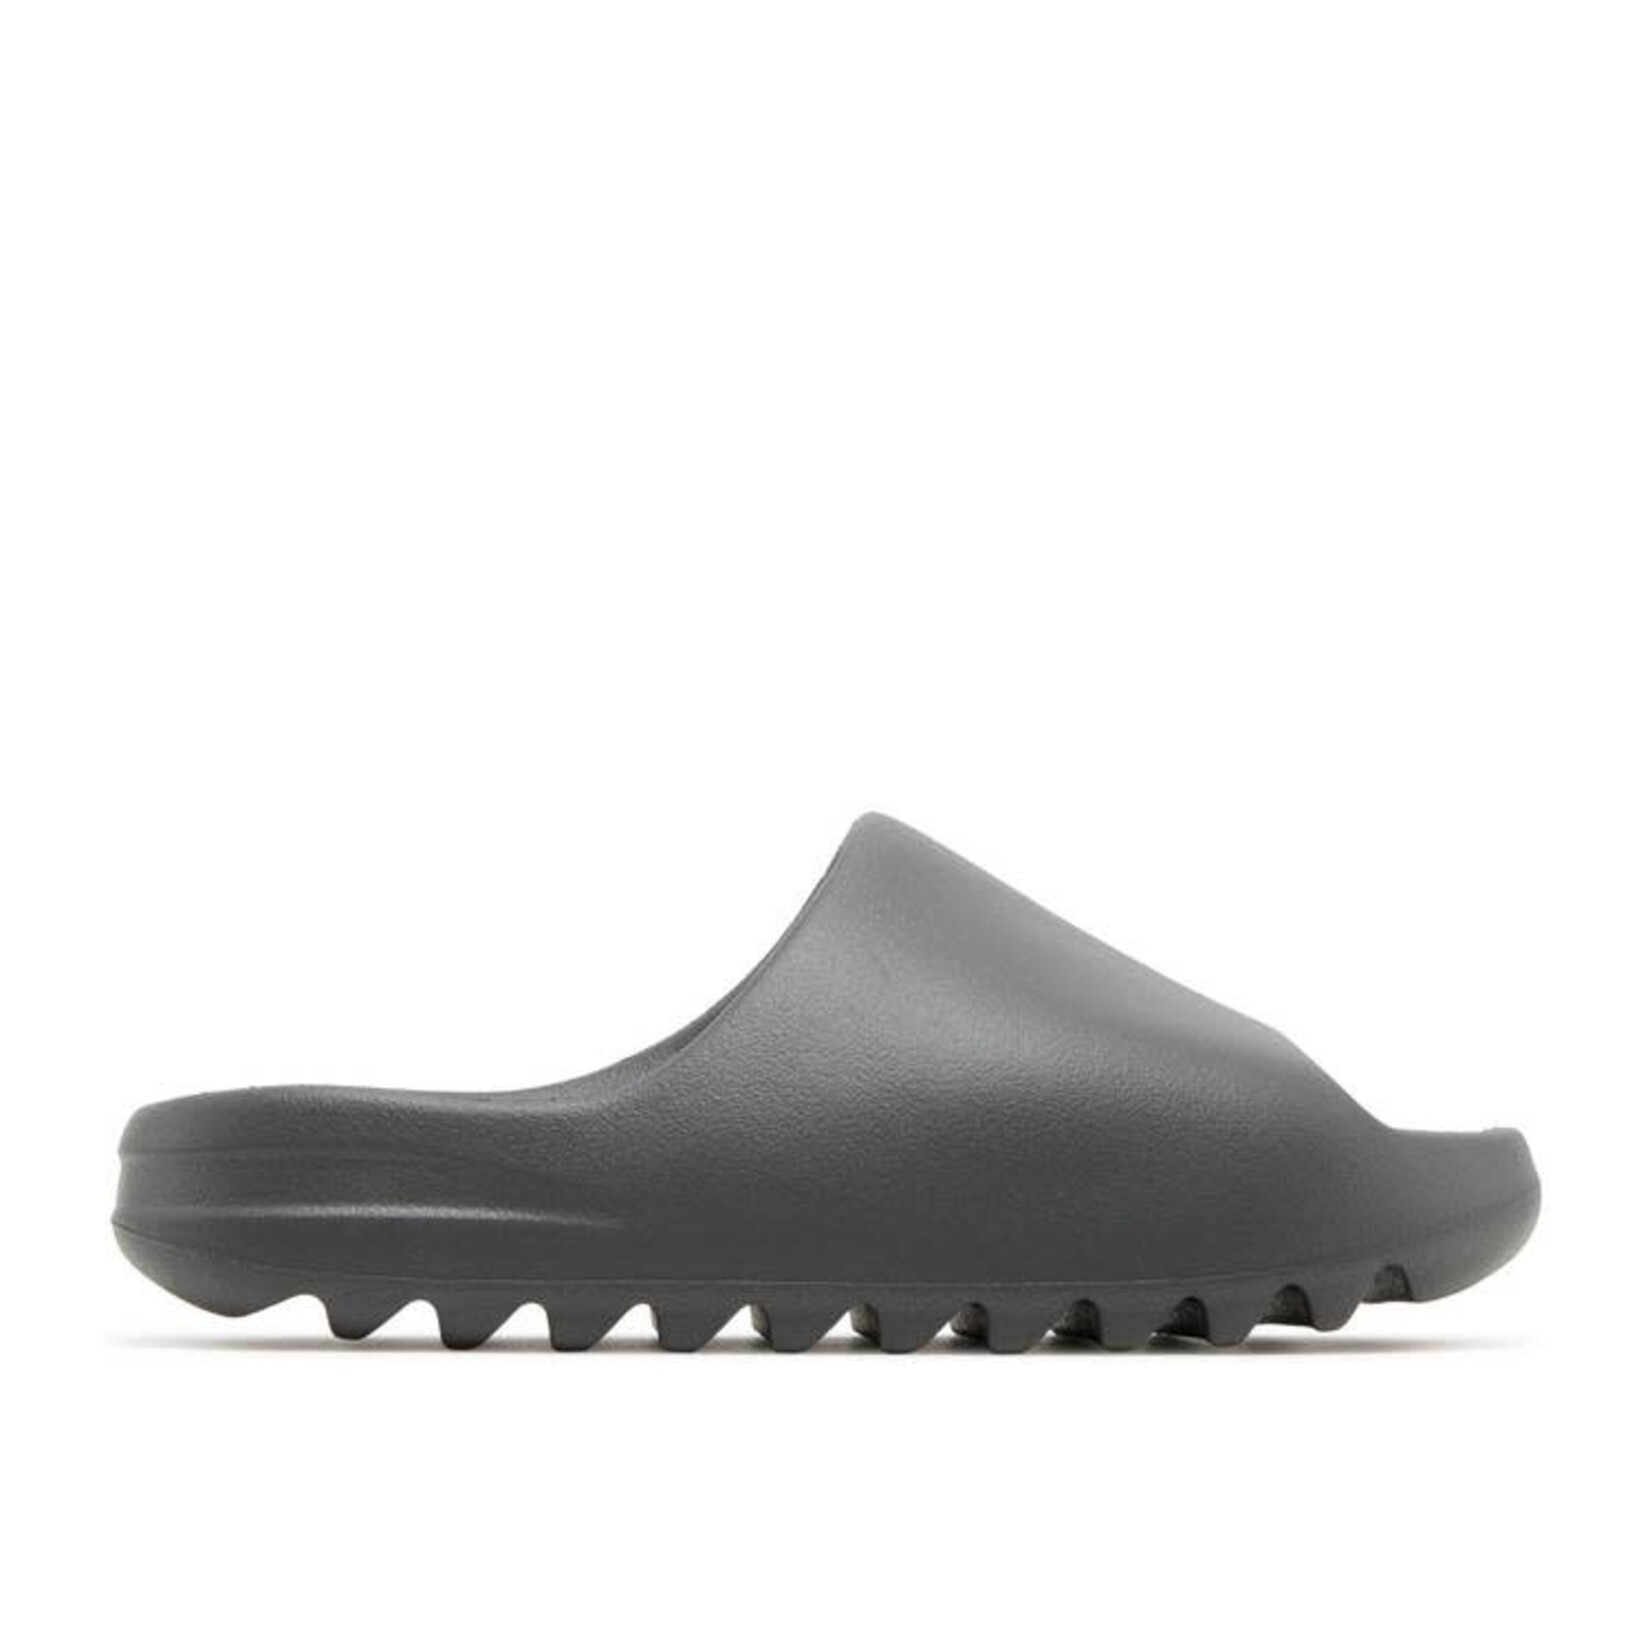 Adidas Adidas Yeezy Slide Granite Size 11, DS BRAND NEW